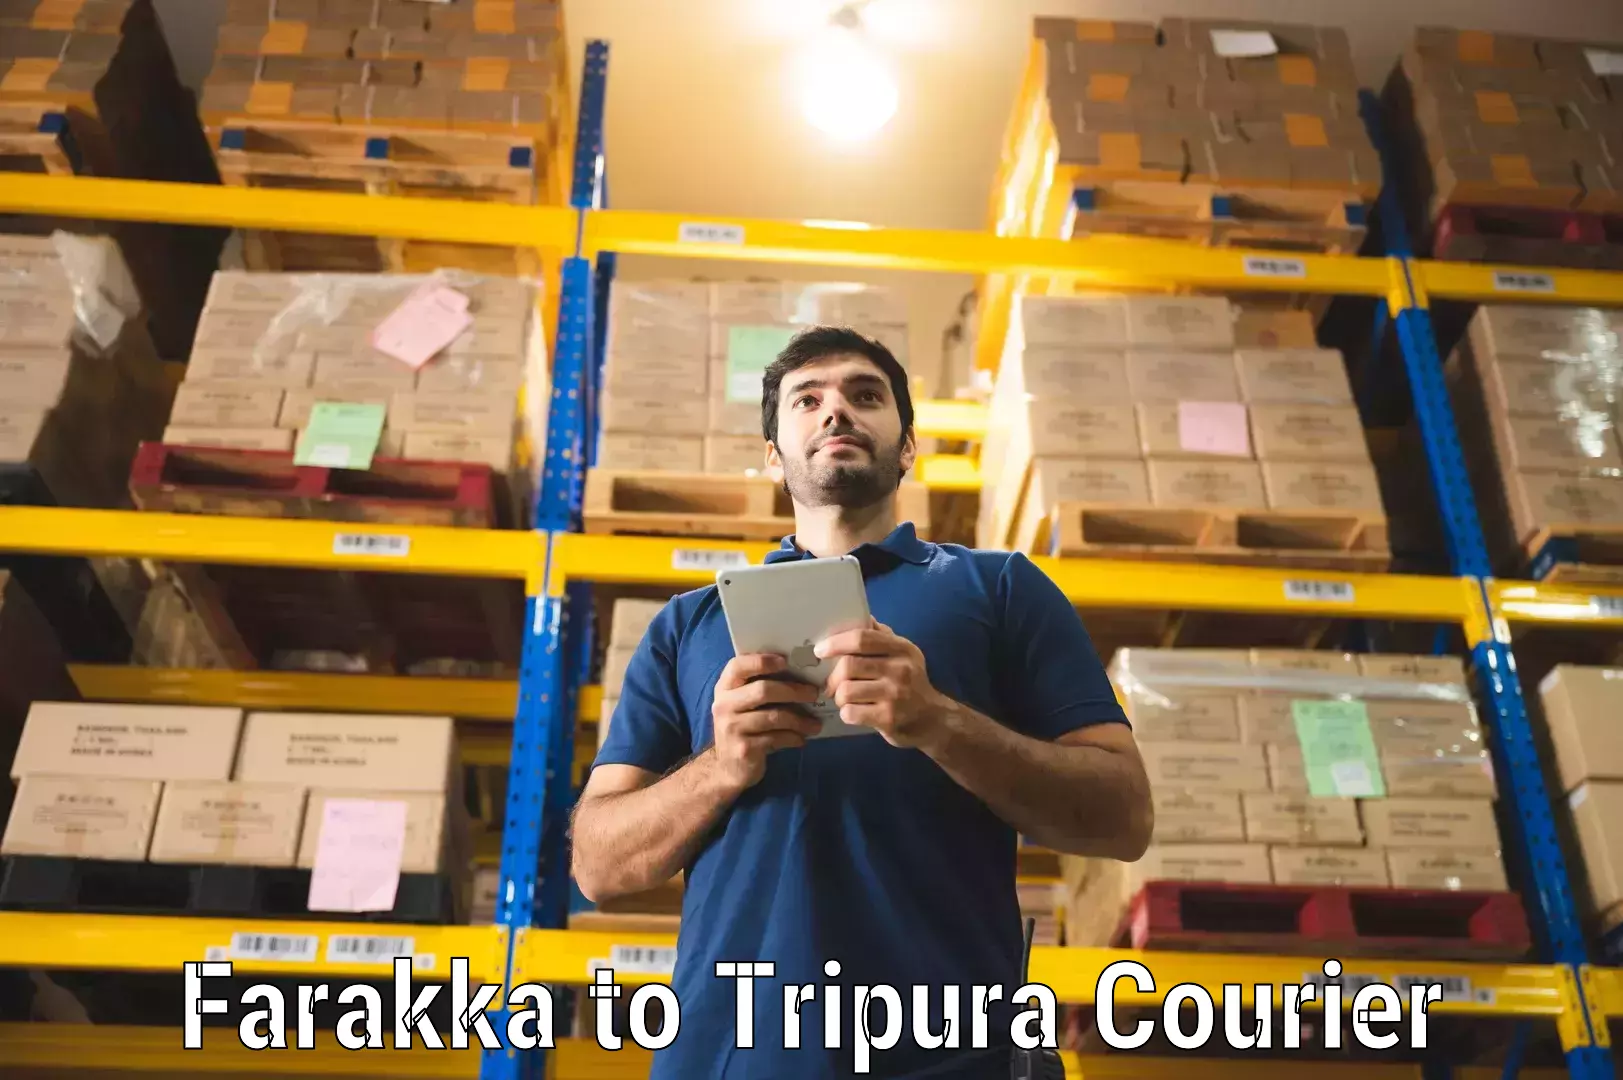 24-hour courier service Farakka to Tripura